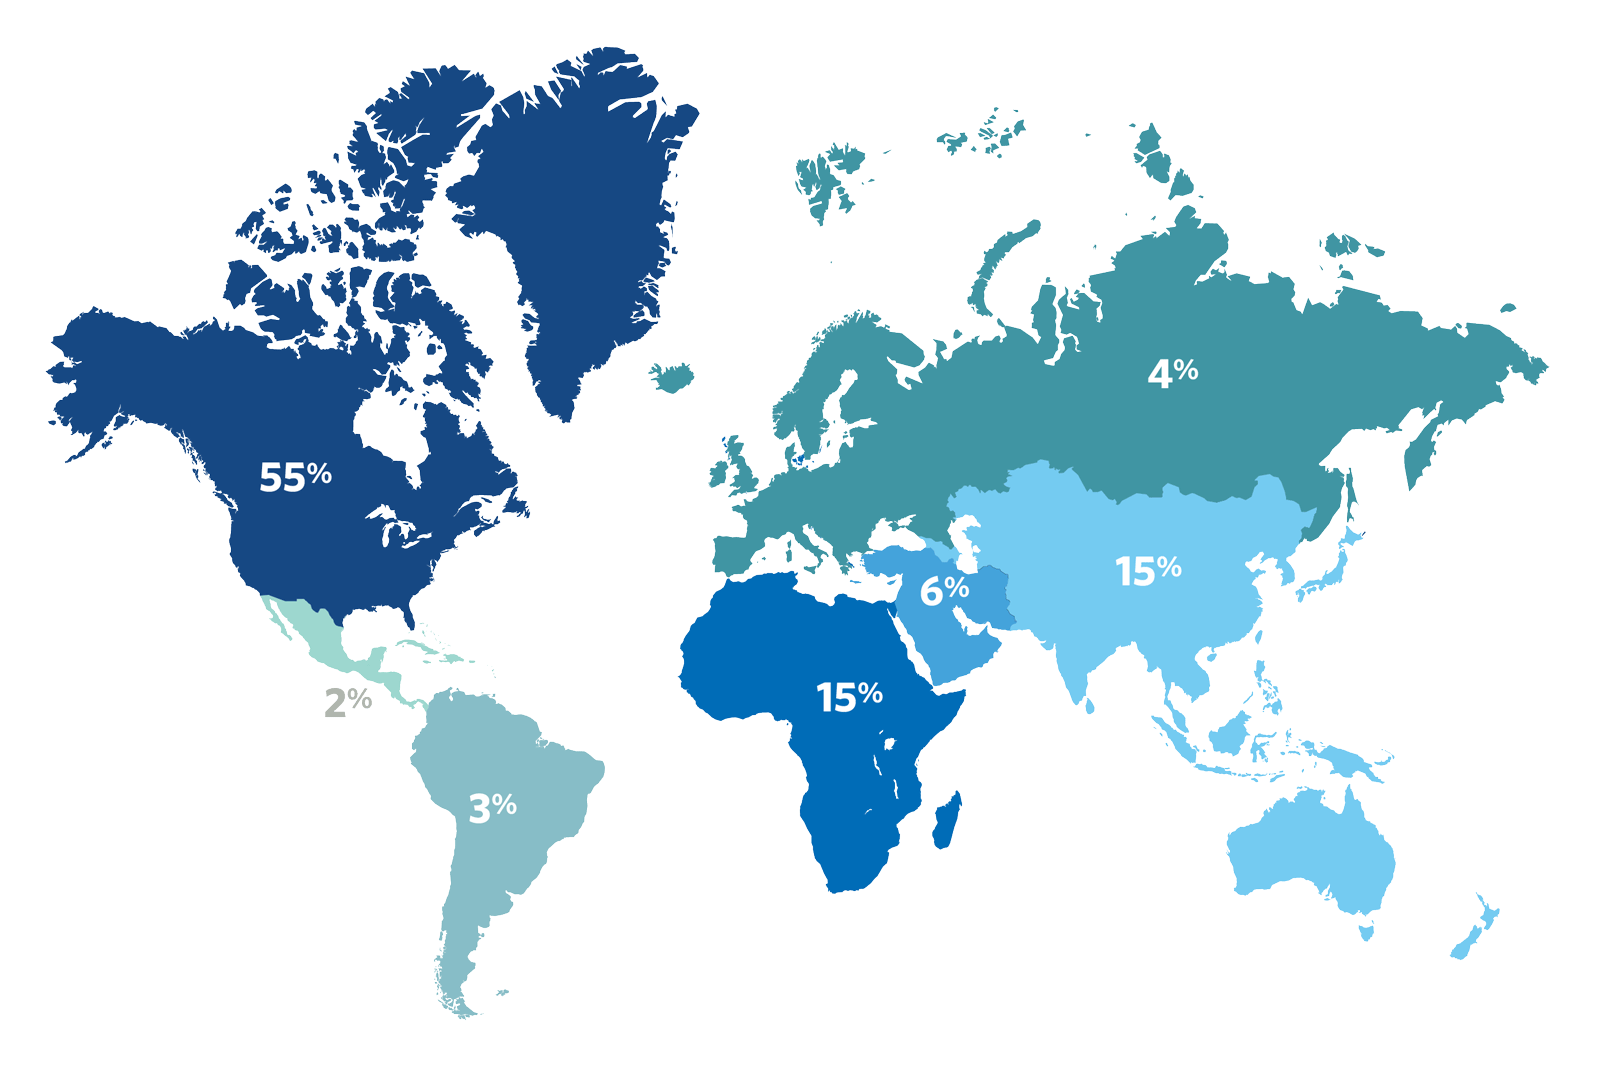 Global Strategic Leadership participants by region